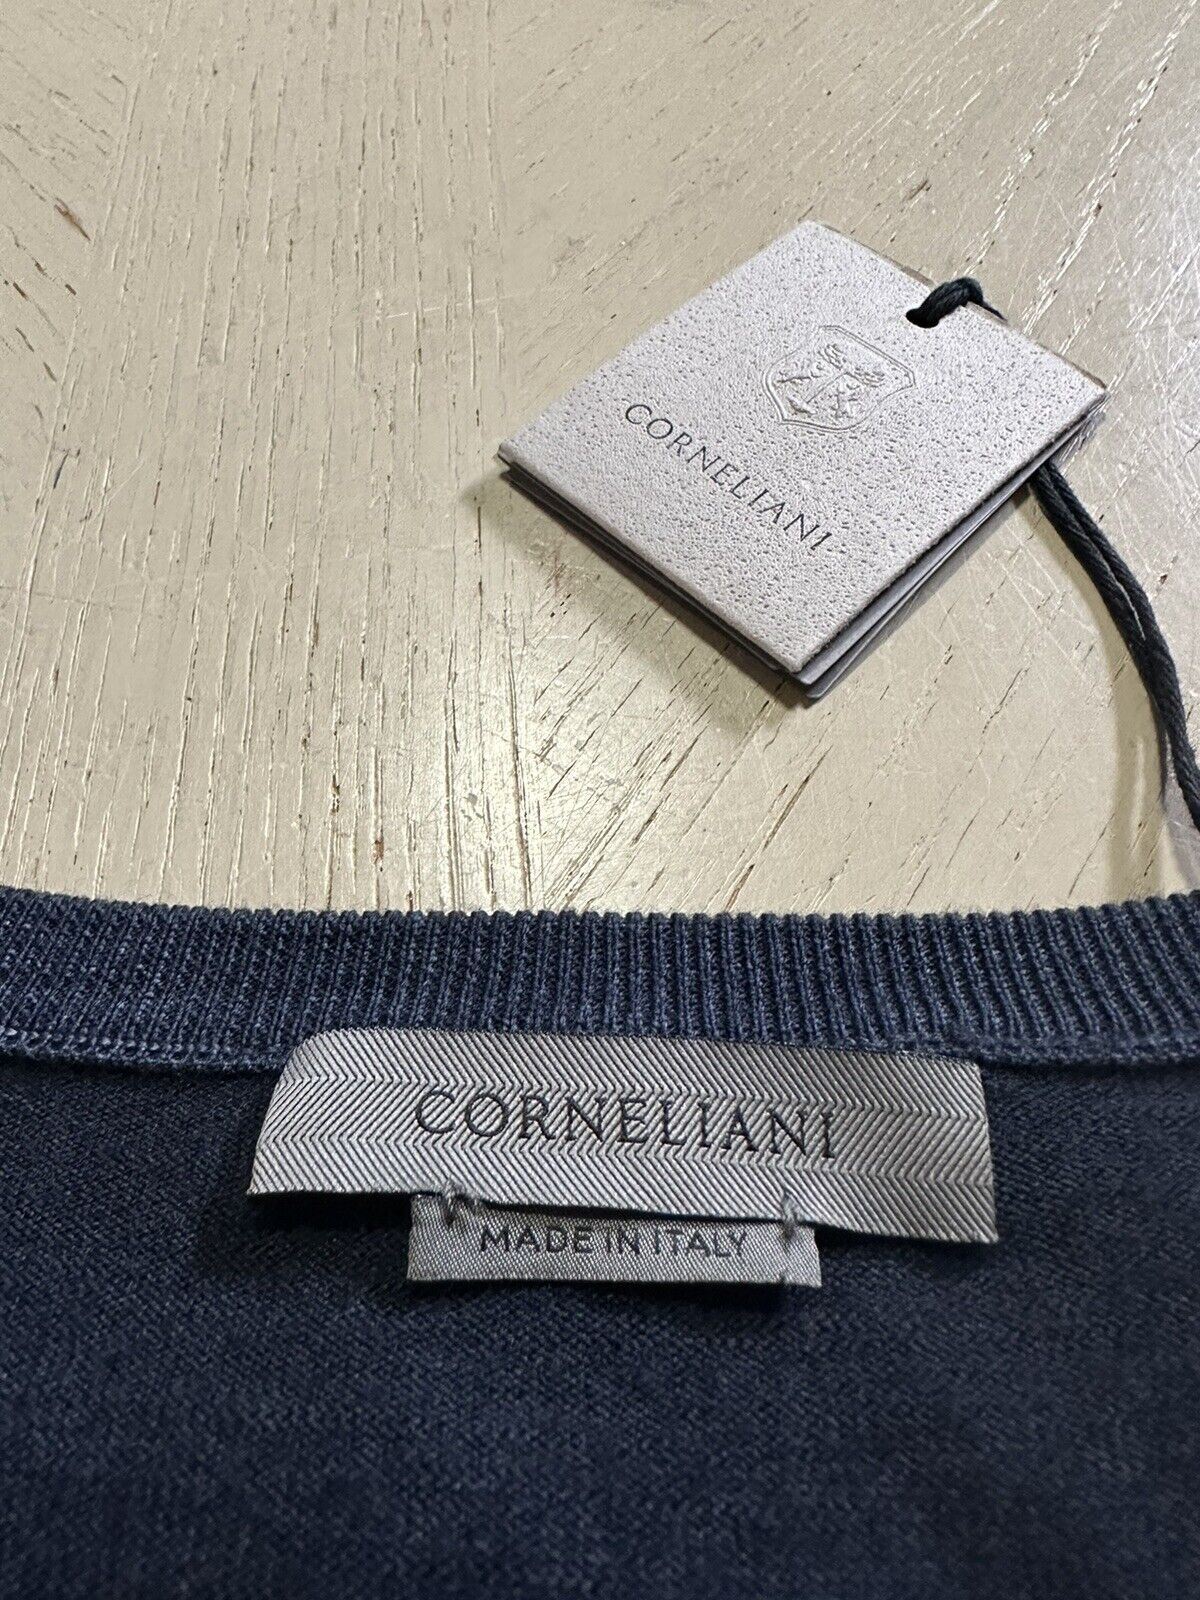 Neu mit Etikett: 550 $ Corneliani Herren-Wollpullover mit Rundhalsausschnitt, Marineblau, 46 US (56 Eu), Irland